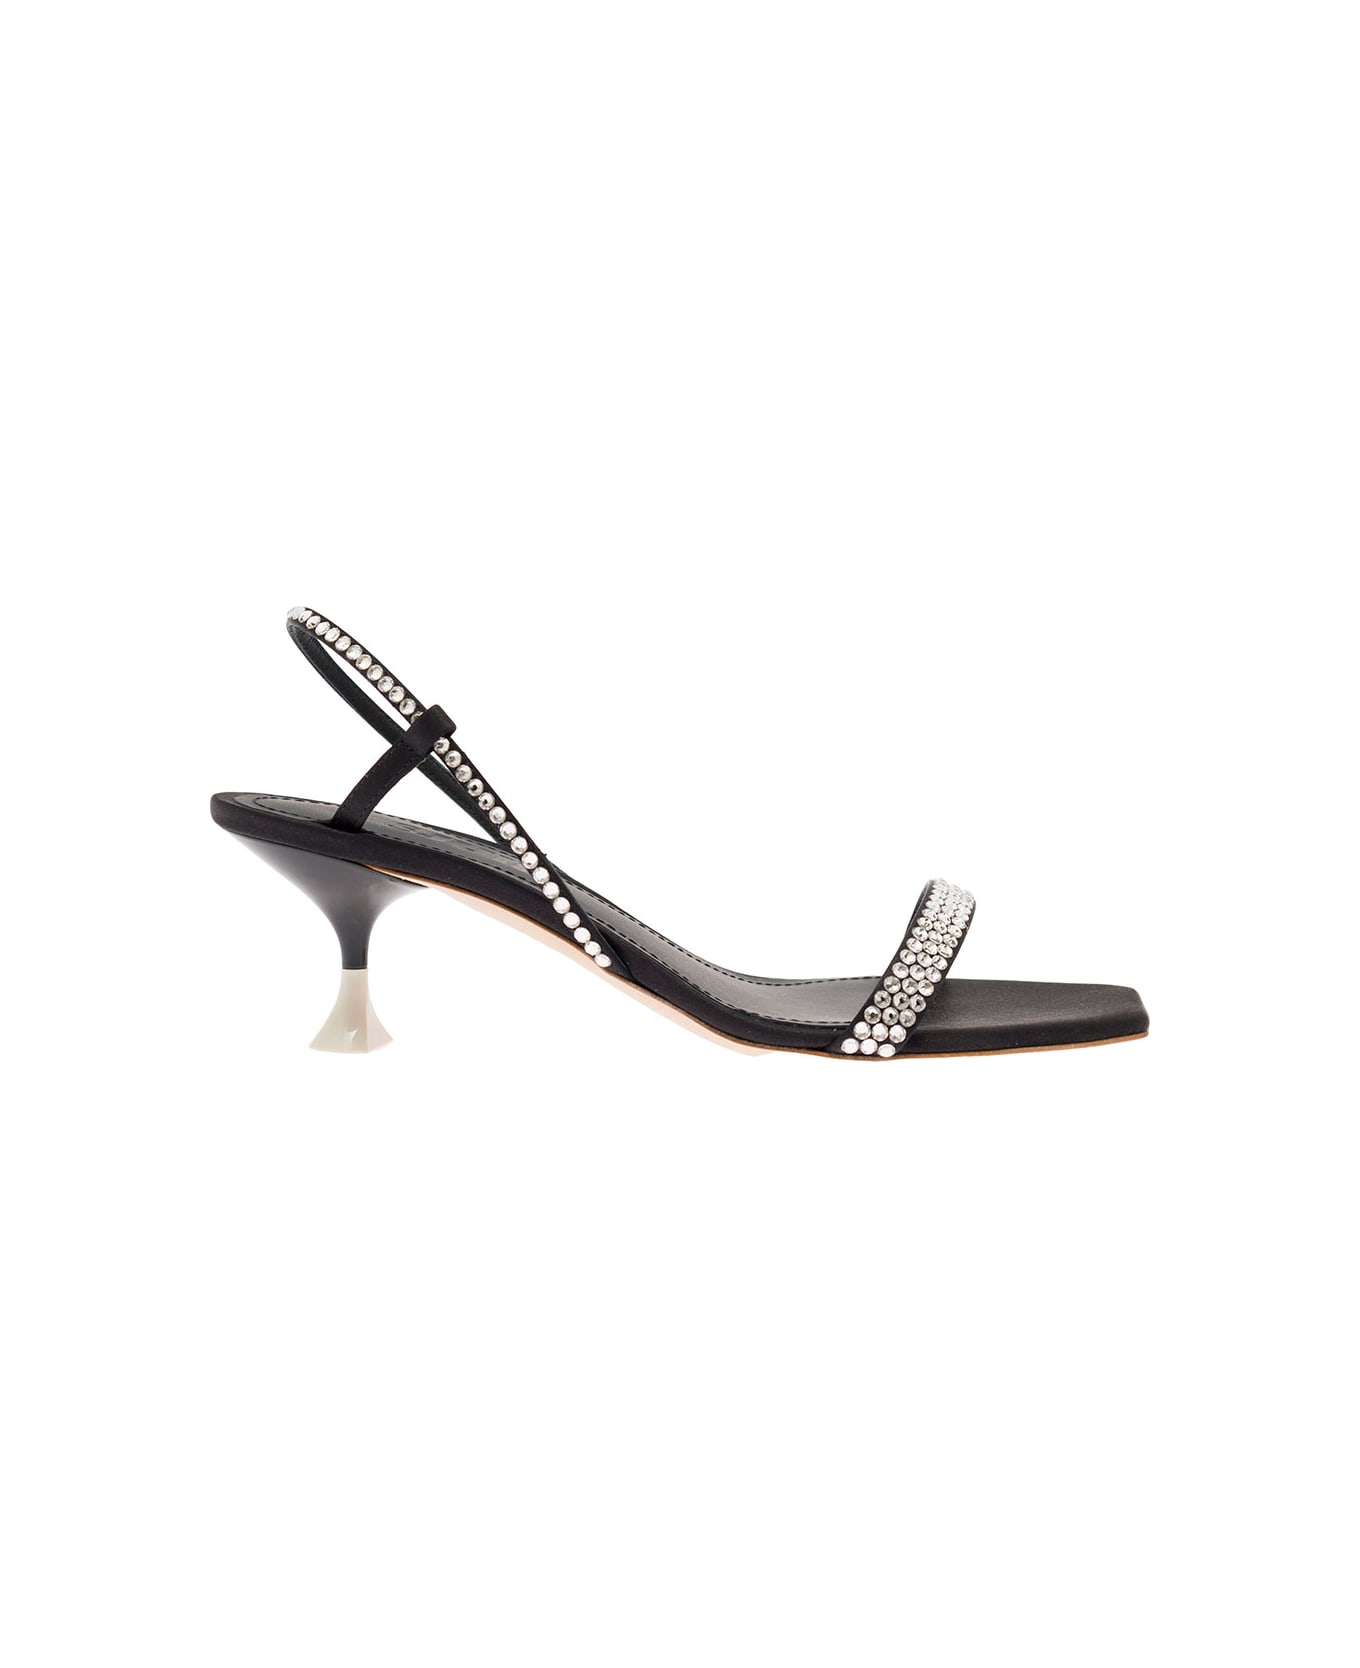 3JUIN 'eloise' Black Sandals With Rhinestone Embellishment And Spool Heel In Viscose Blend Woman - Black サンダル